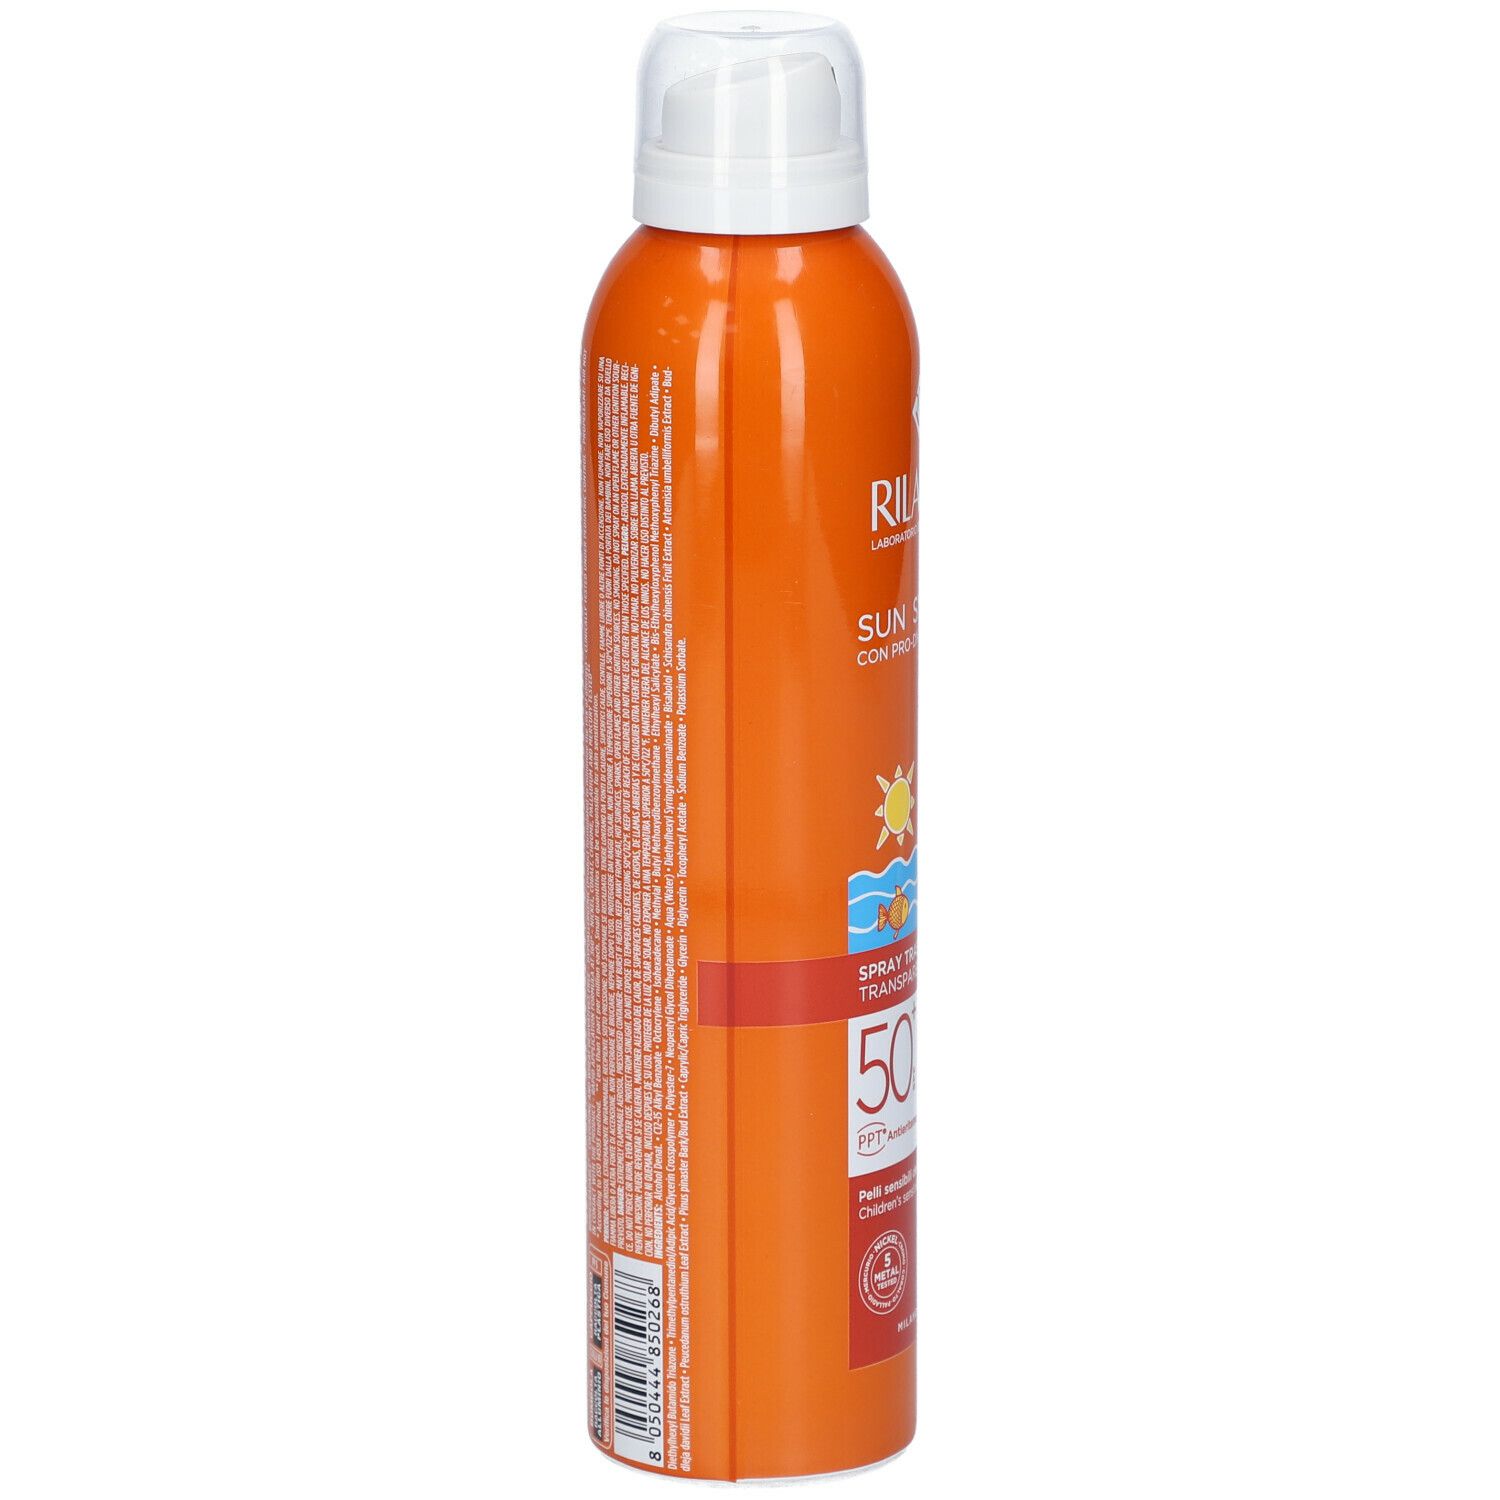 RILASTIL® Sun System Baby Spray Transparent SPF 50+